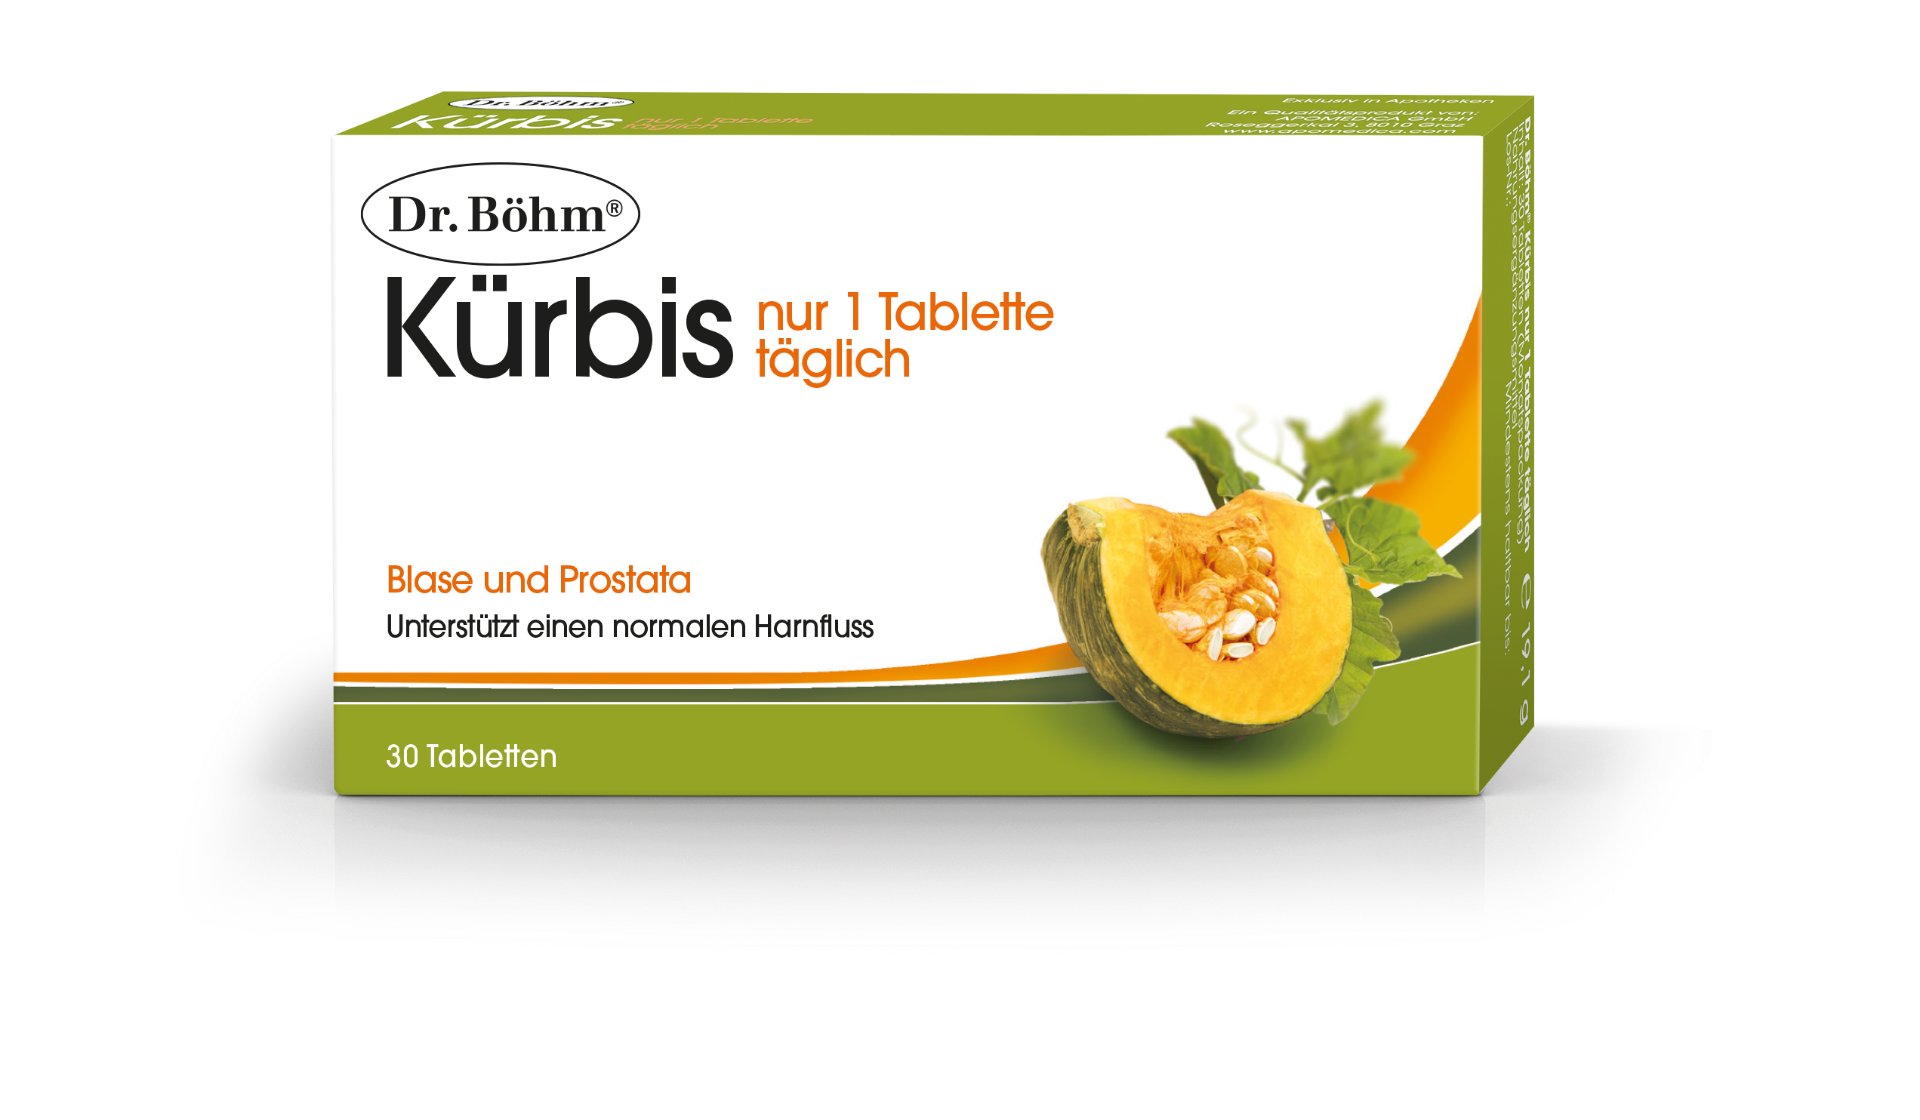 Dr. Böhm Kürbis 1 Tablette täglich